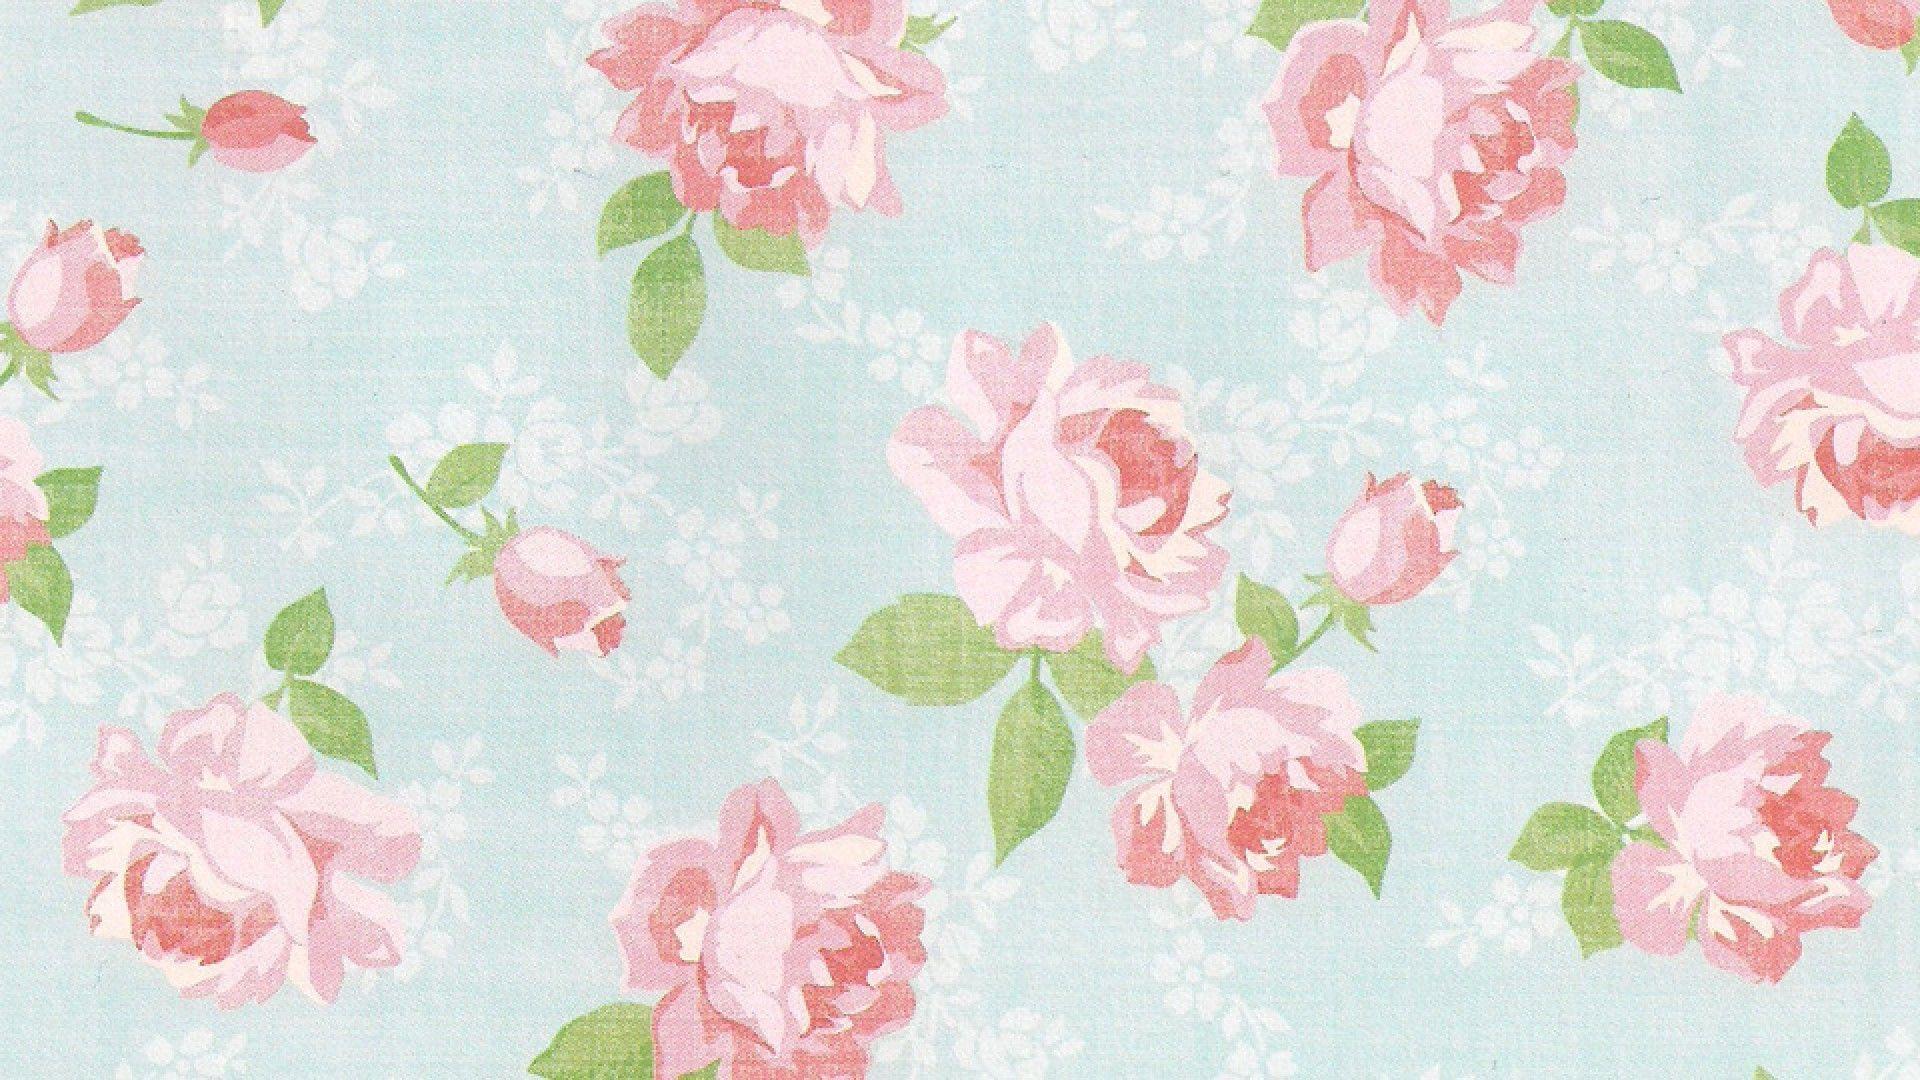 floral vintage tumblr background. Background Check All